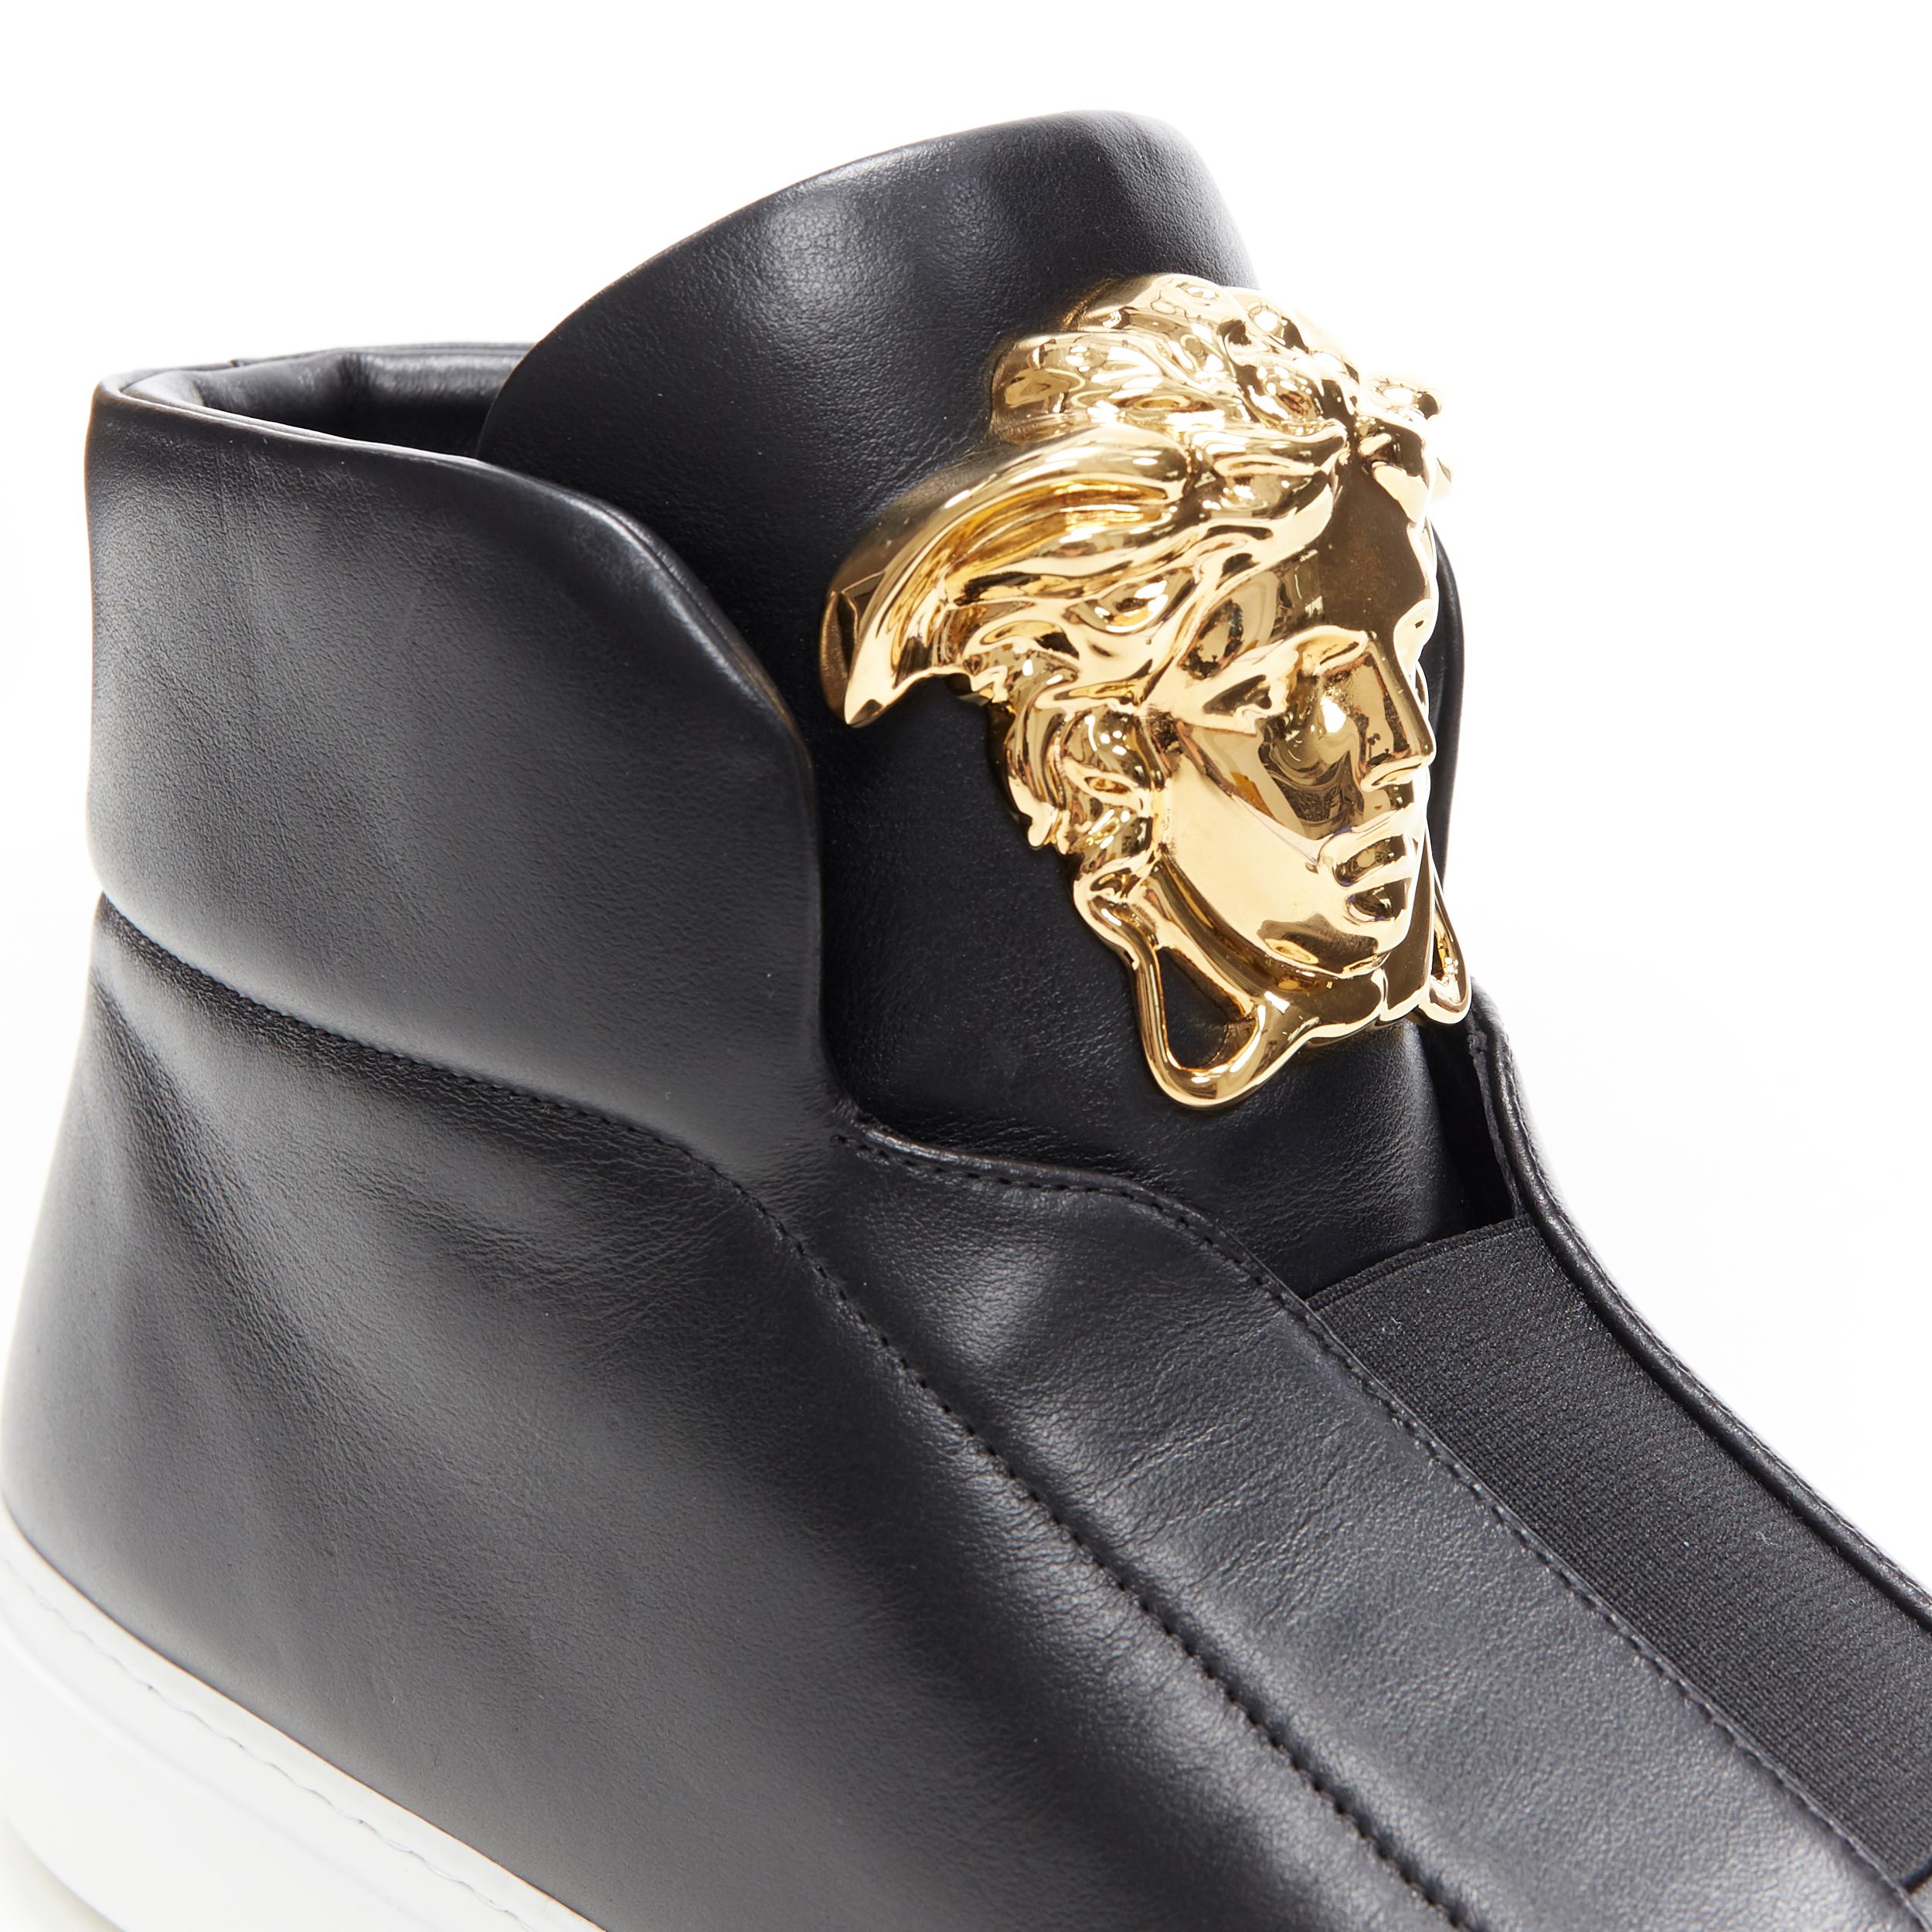 new VERSACE Palazzo gold Medusa black calfskin leather high top sneaker EU40 1